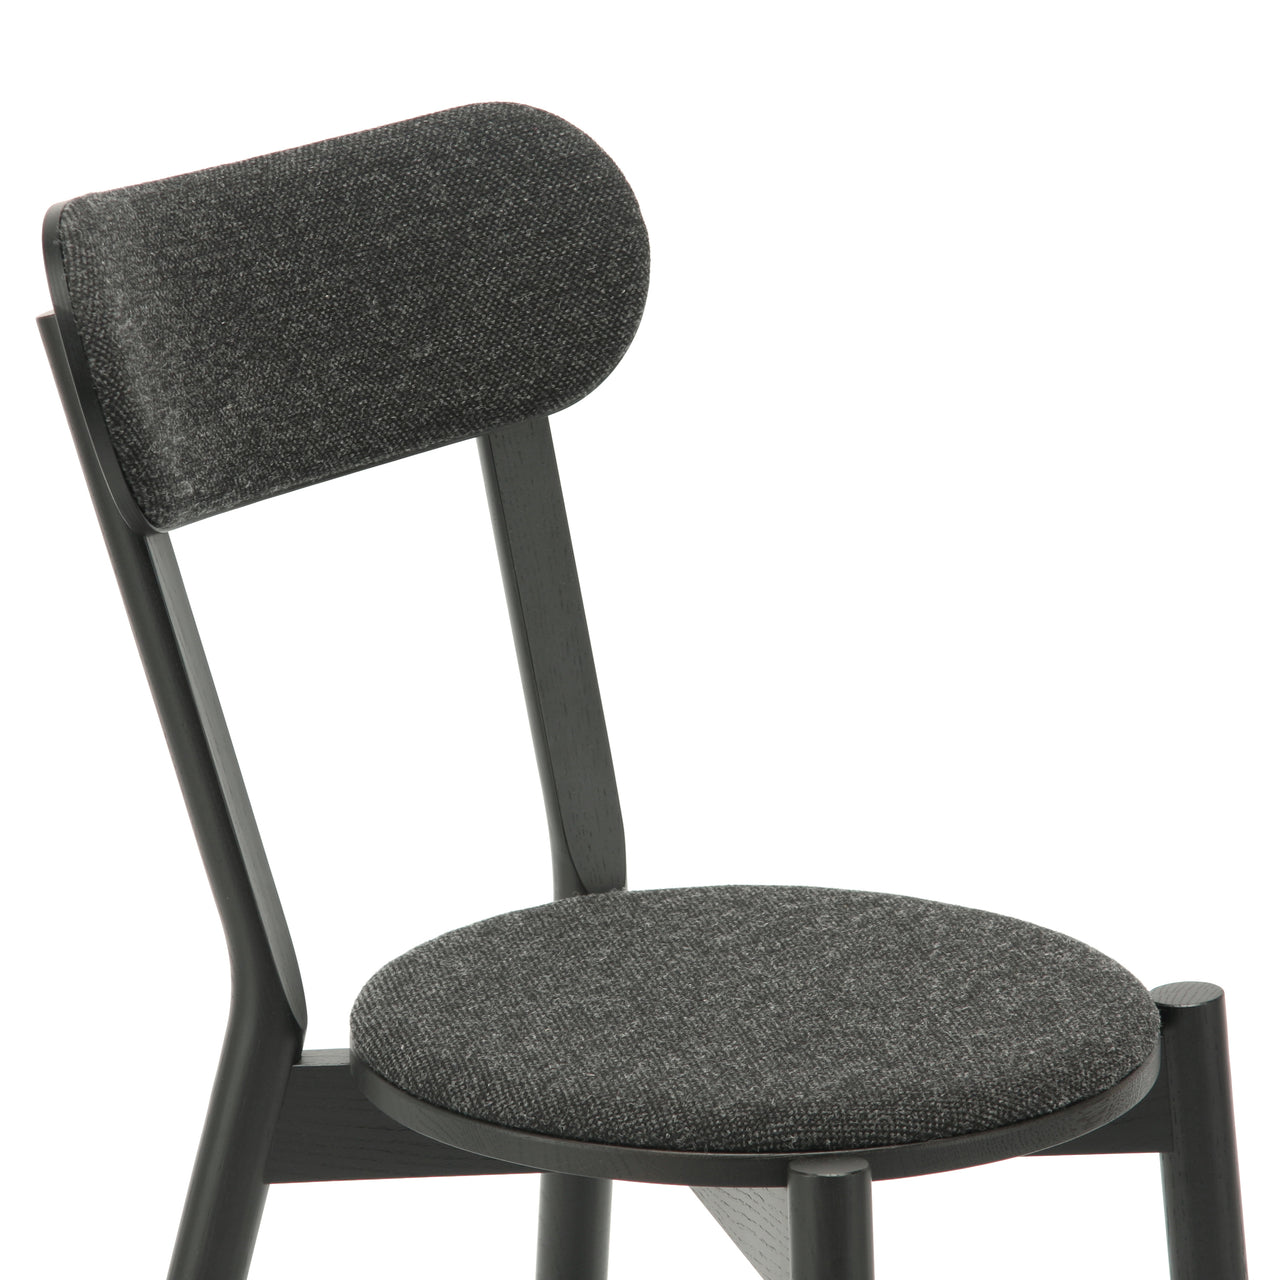 Castor Chair Pad